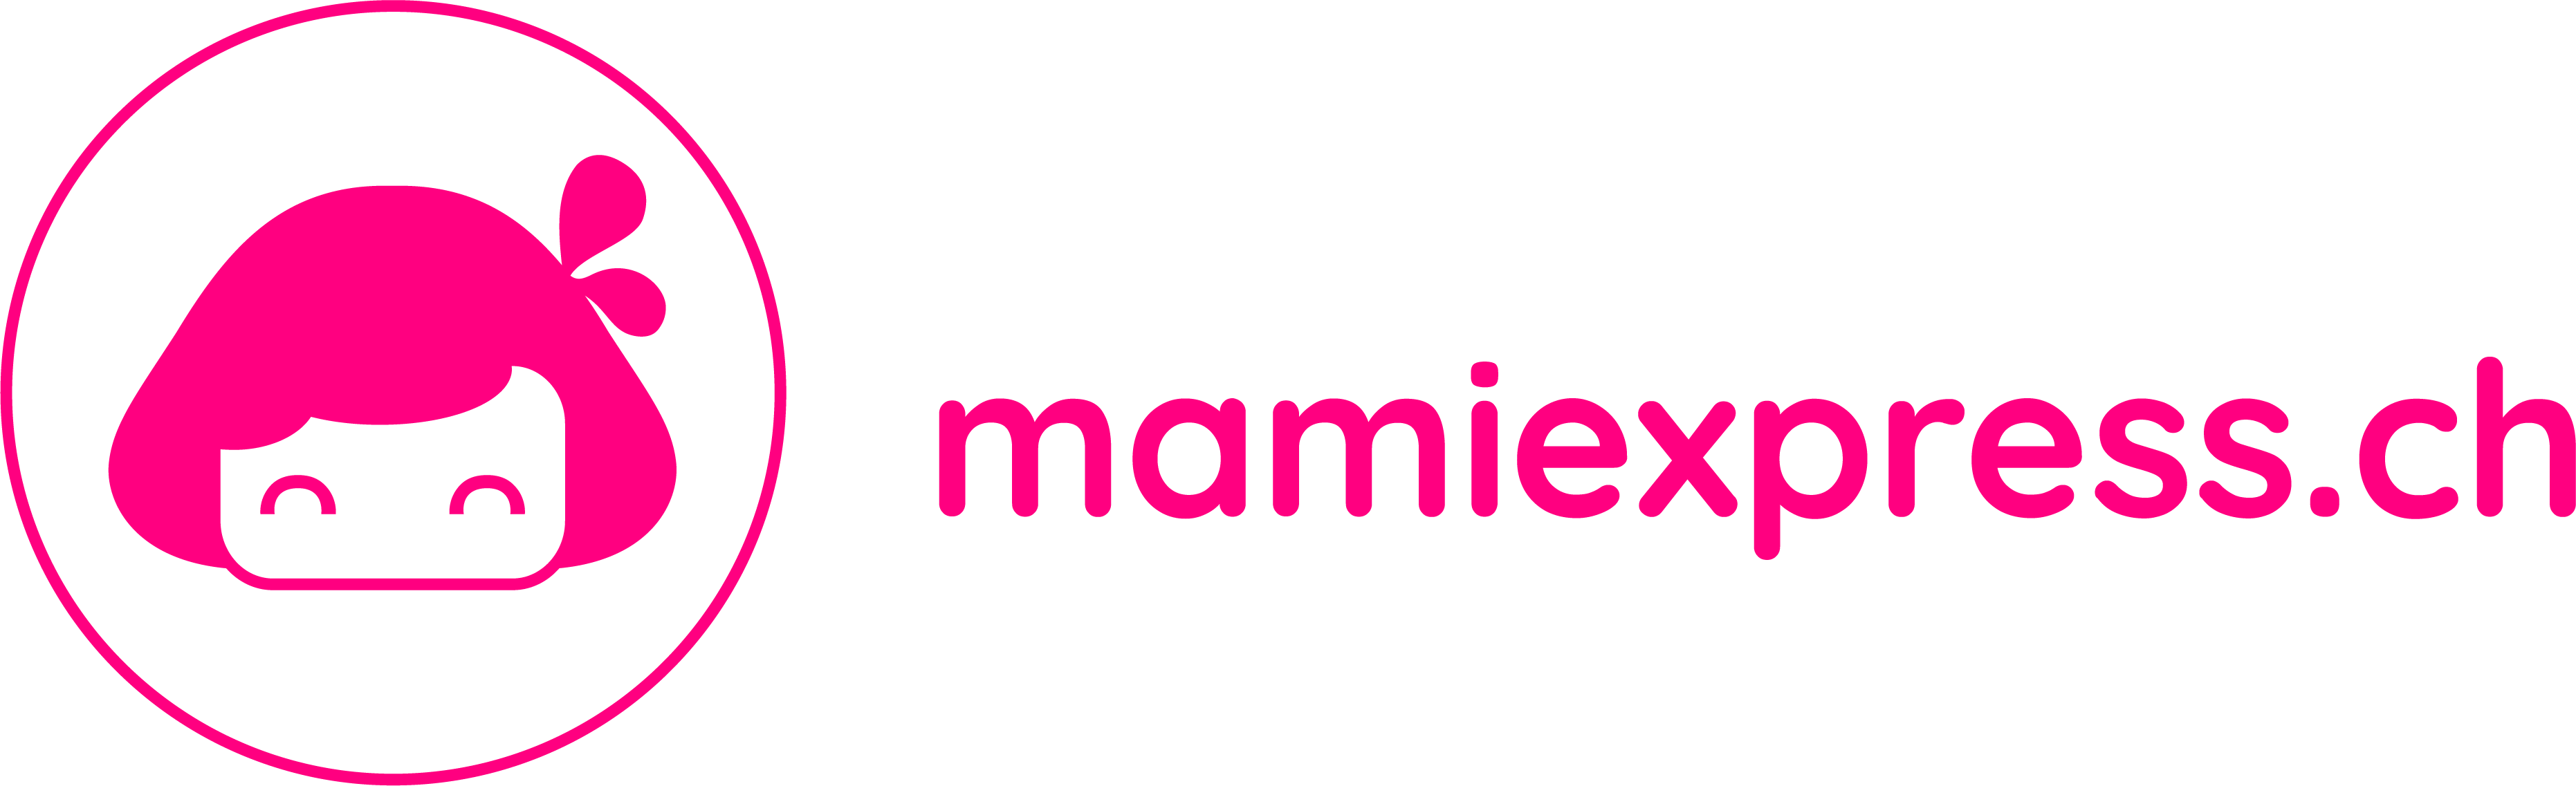 Mamiexpress